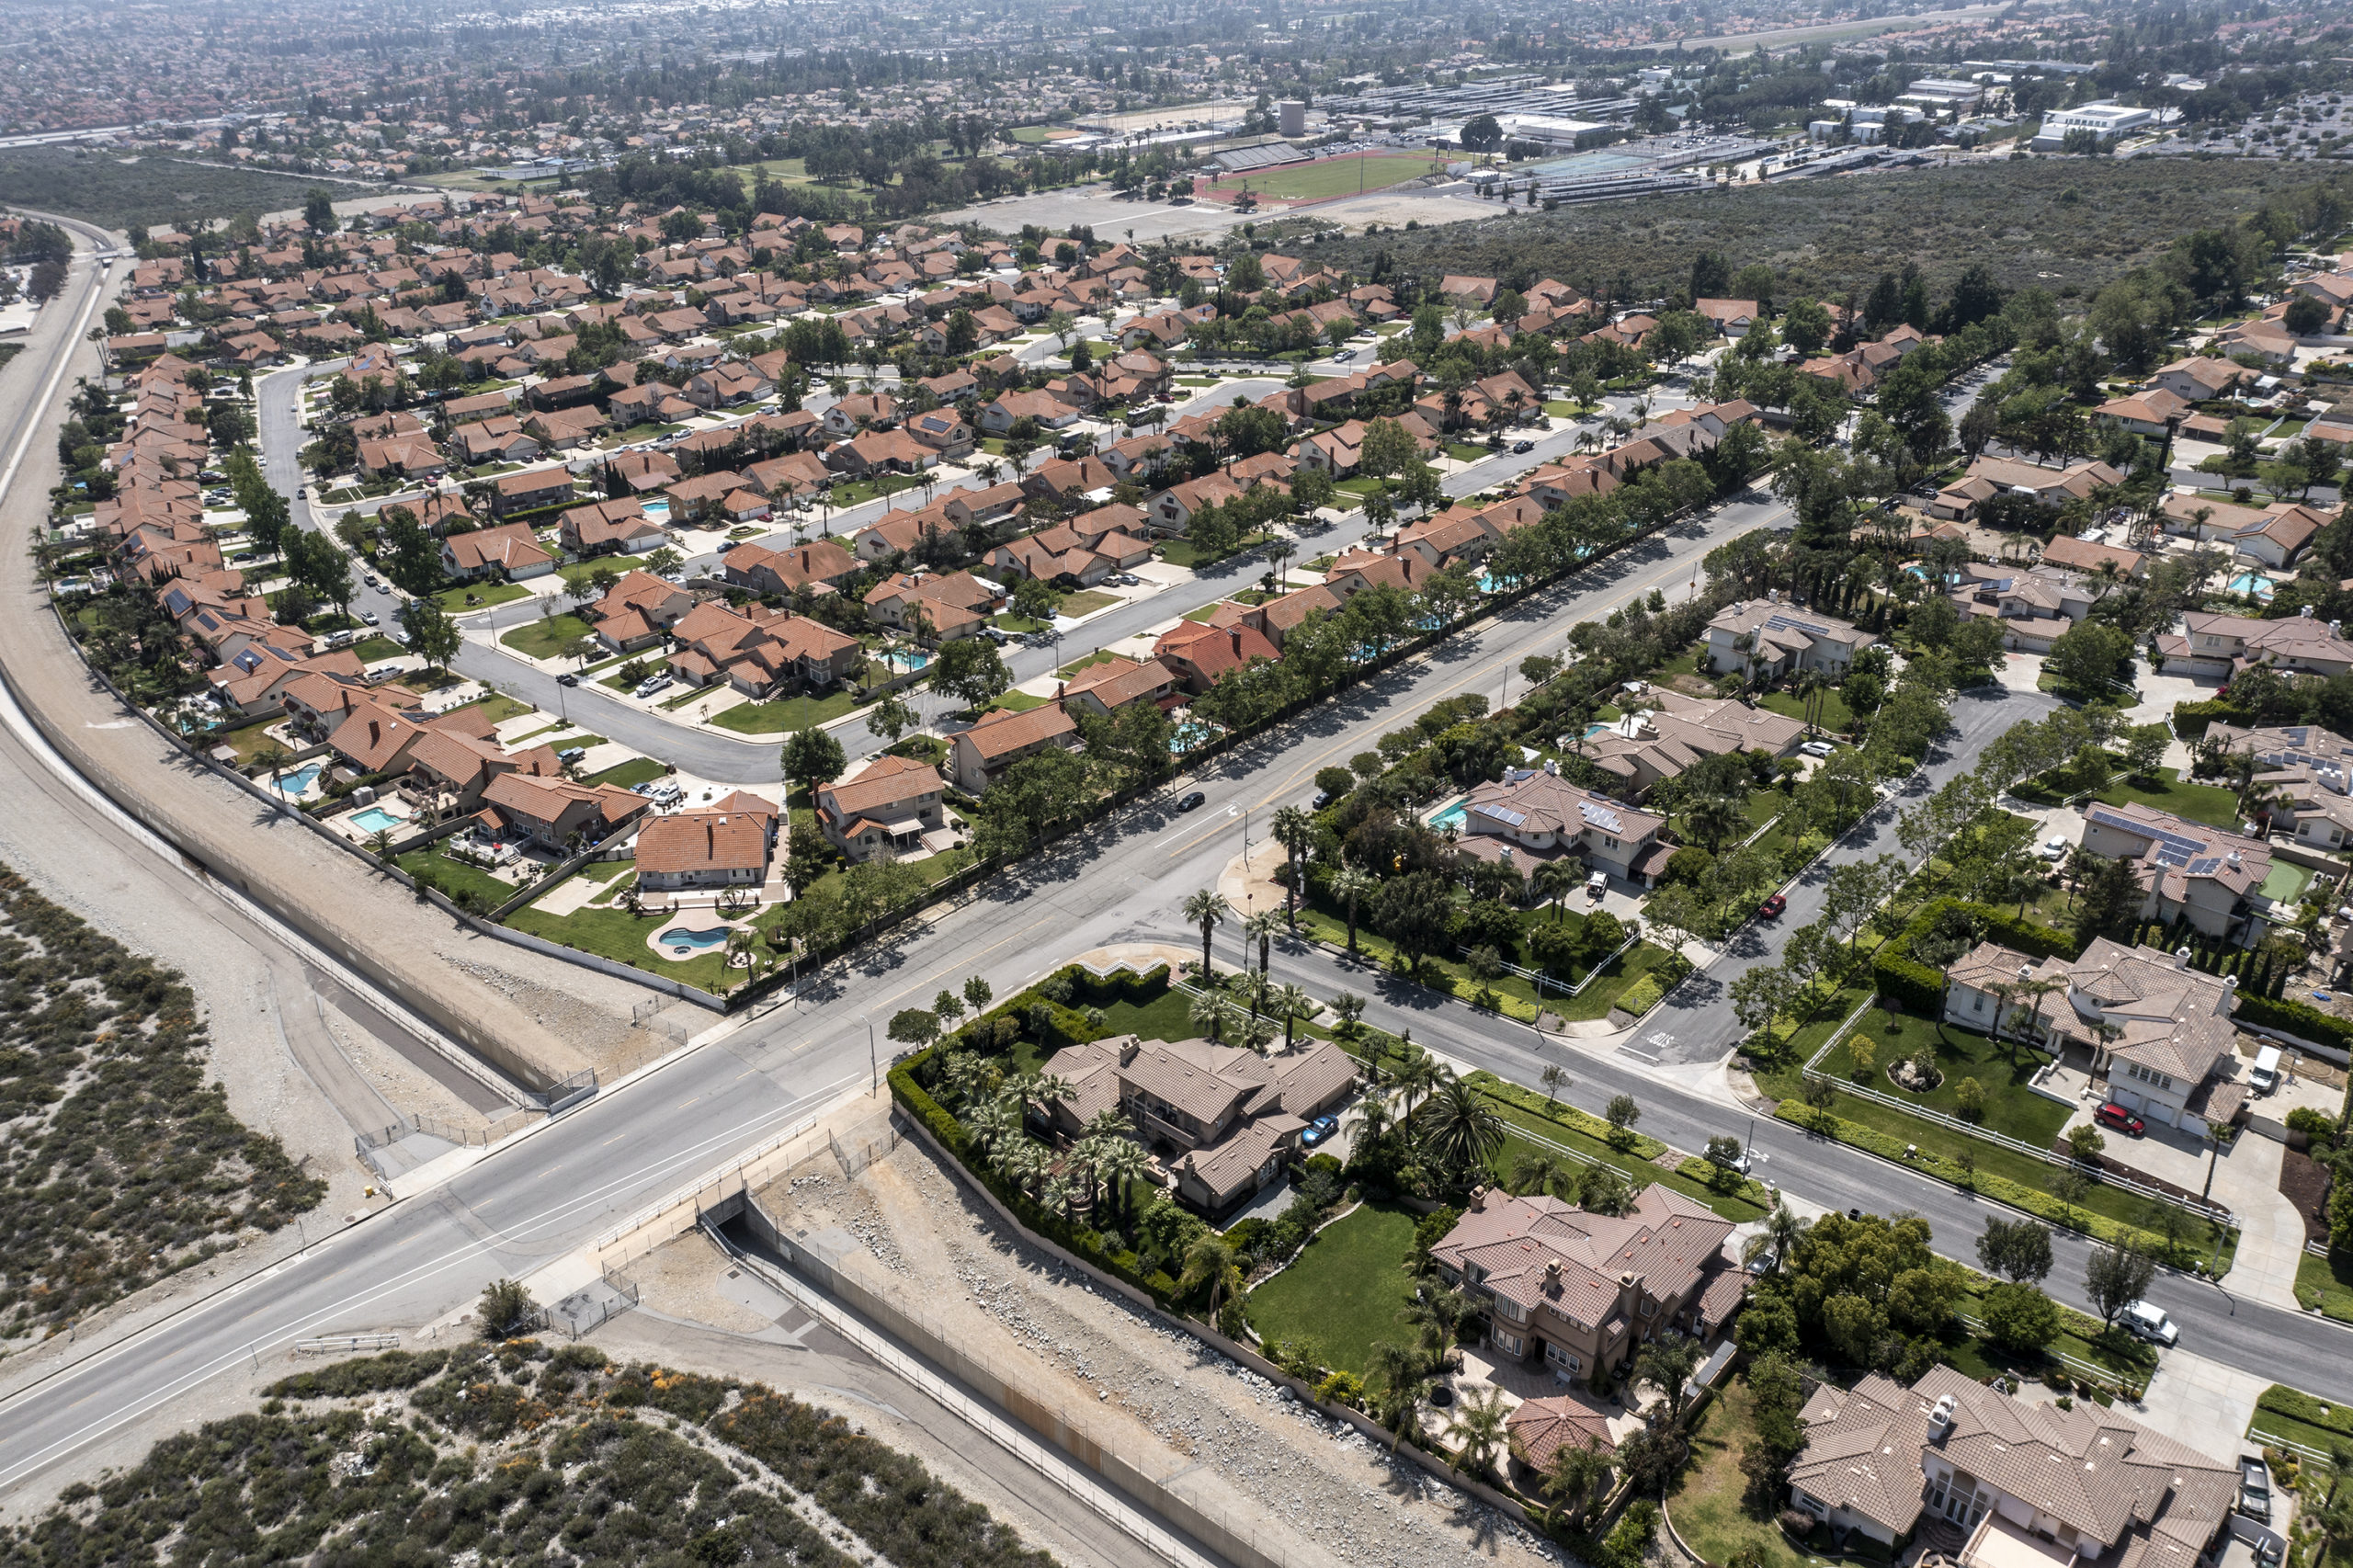 aeriel view of Rancho Cucamonga neighborhood